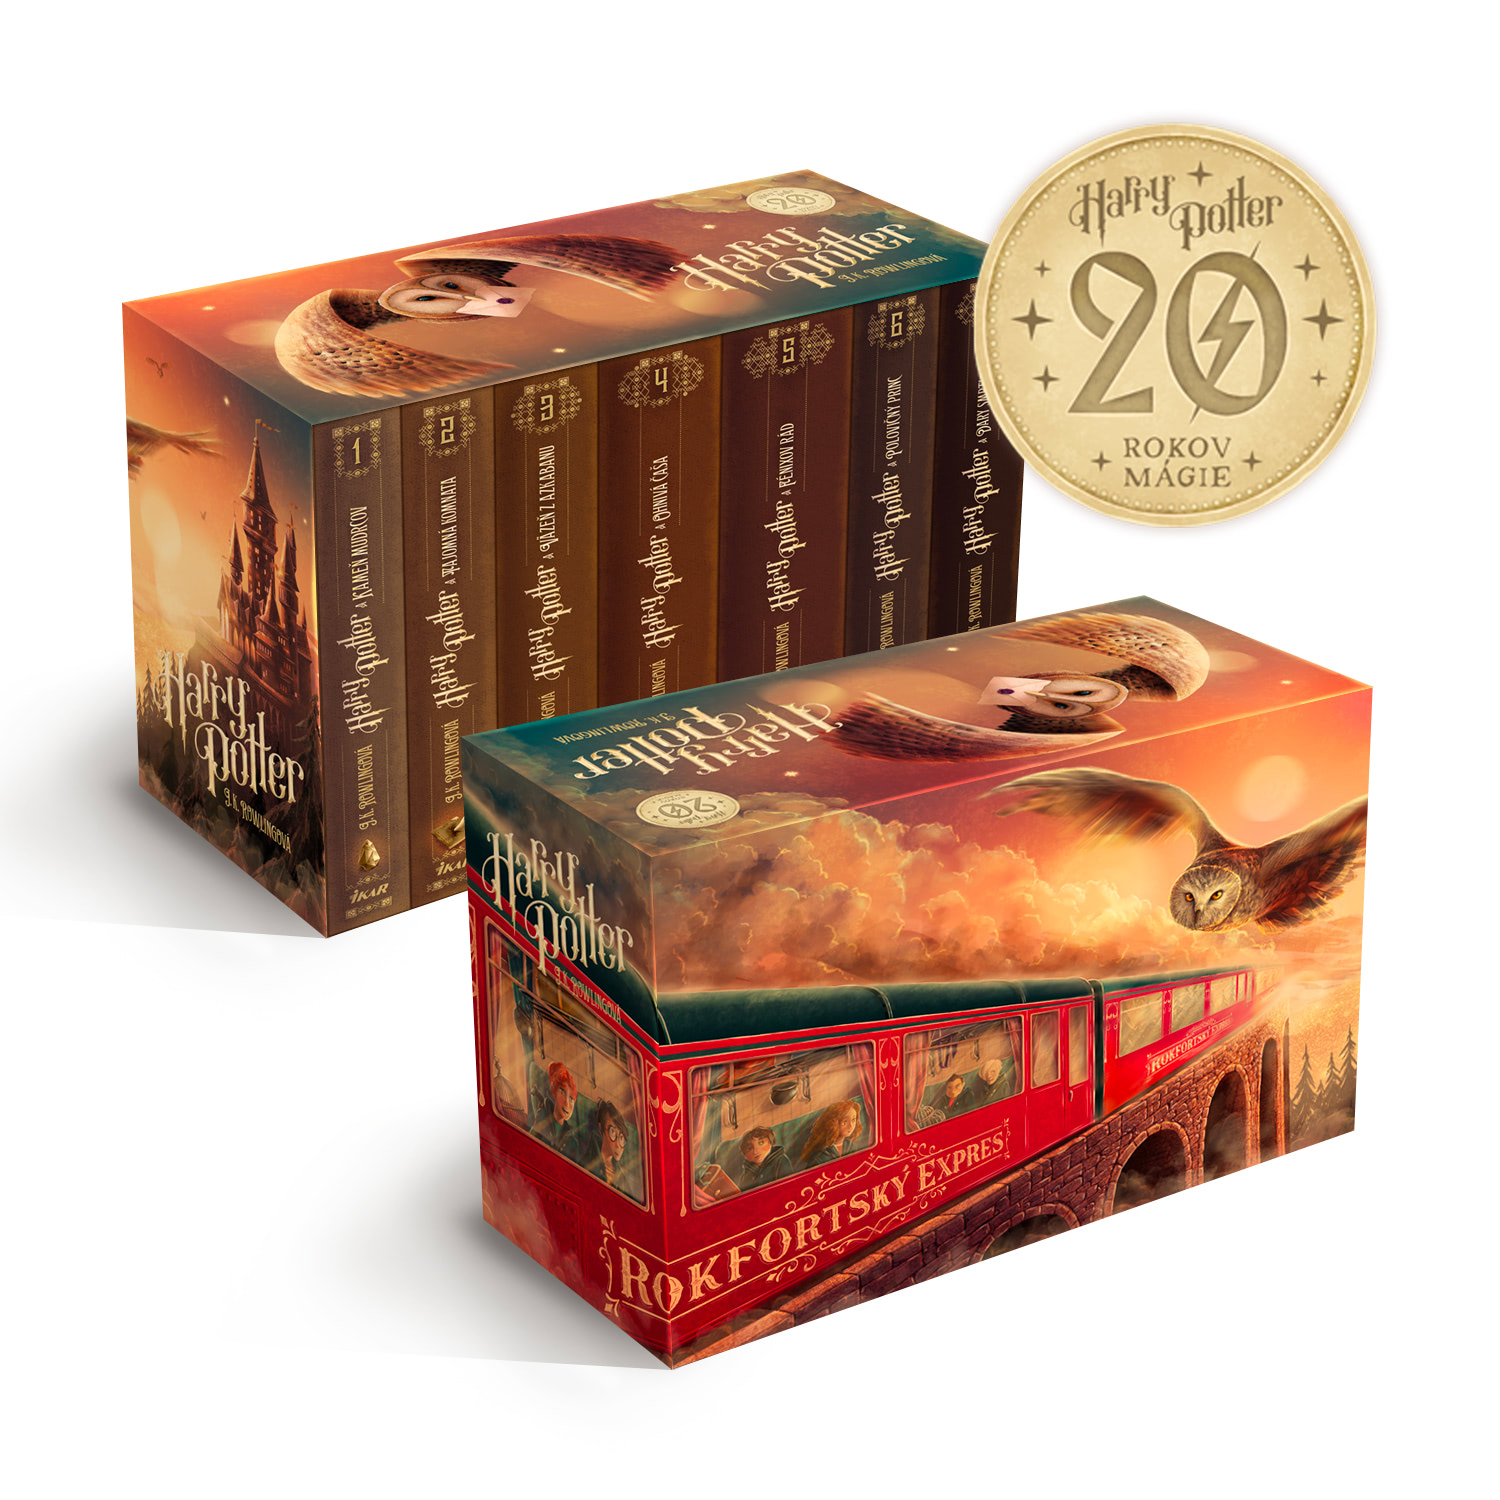 ‘Harry Potter’ Slovak 20th anniversary edition boxed set